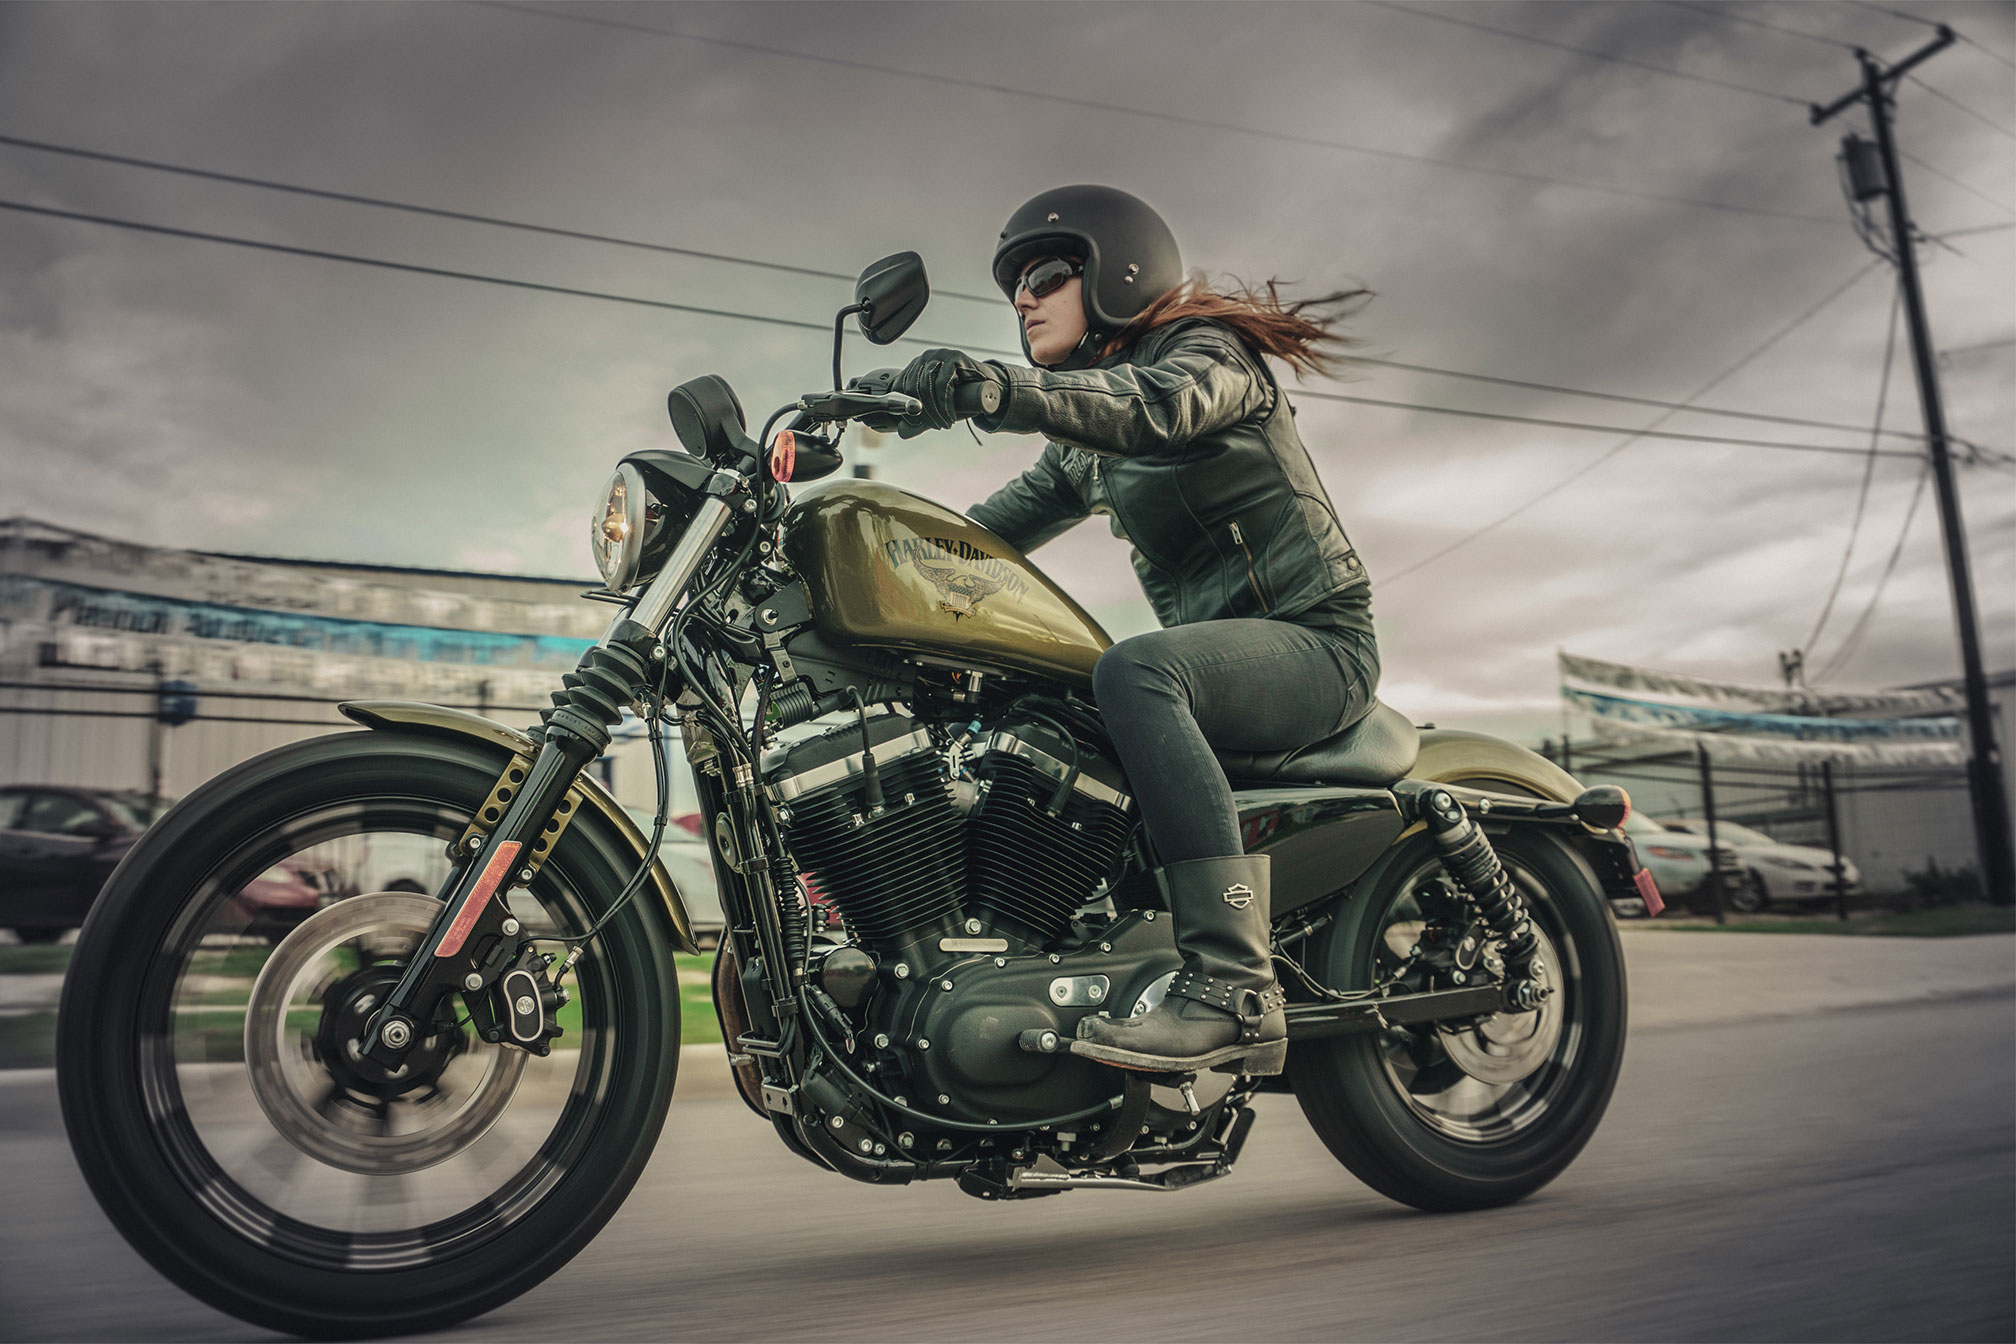 2016 Harley Davidson Iron 883 Review